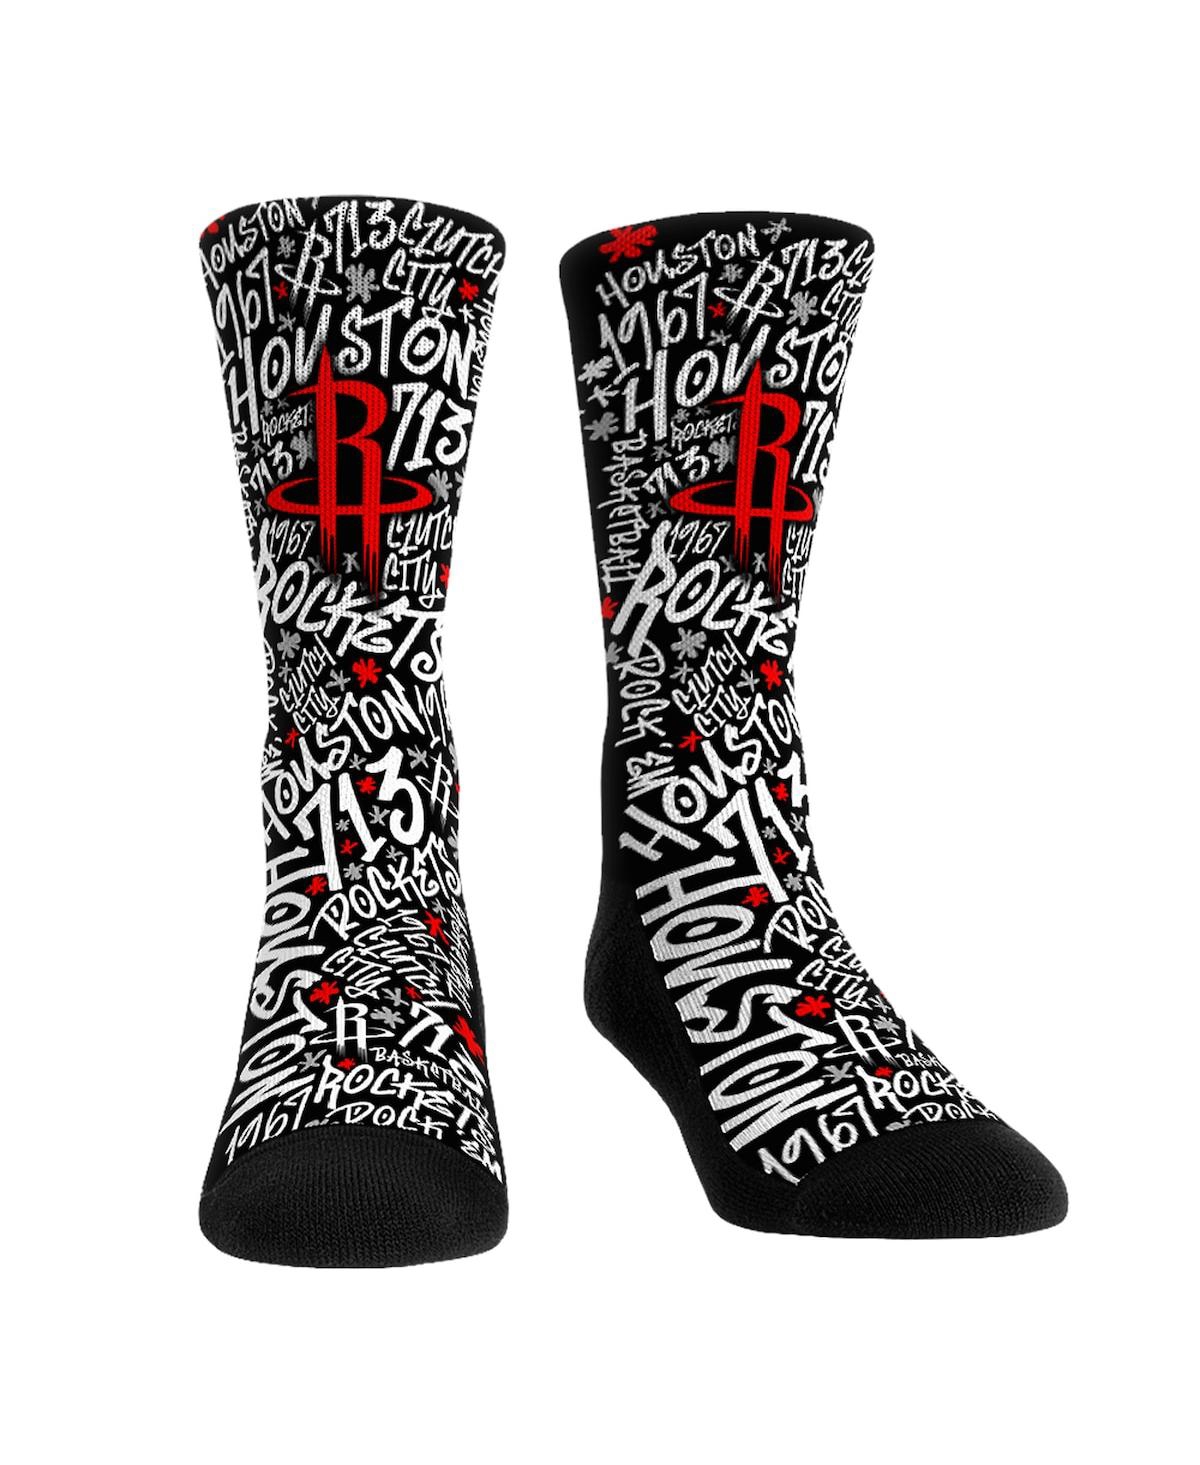 Men's and Women's Rock 'Em Socks Houston Rockets Graffiti Crew Socks - Multi